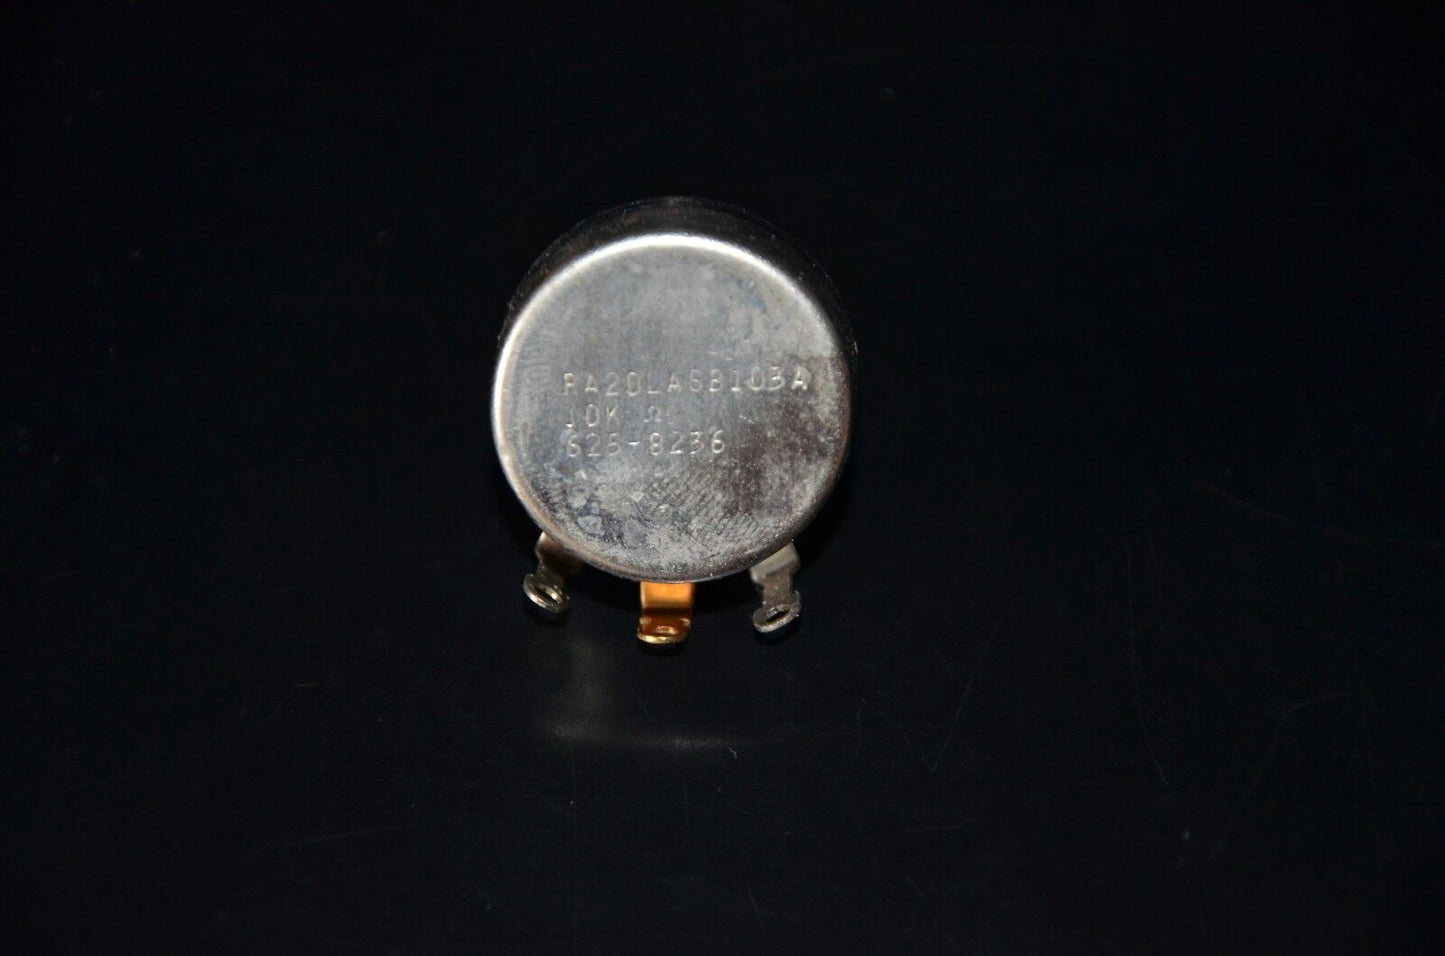 Clarostat NOS vintage potentiometer 10K Ohm RA20LASB103A 625-8236